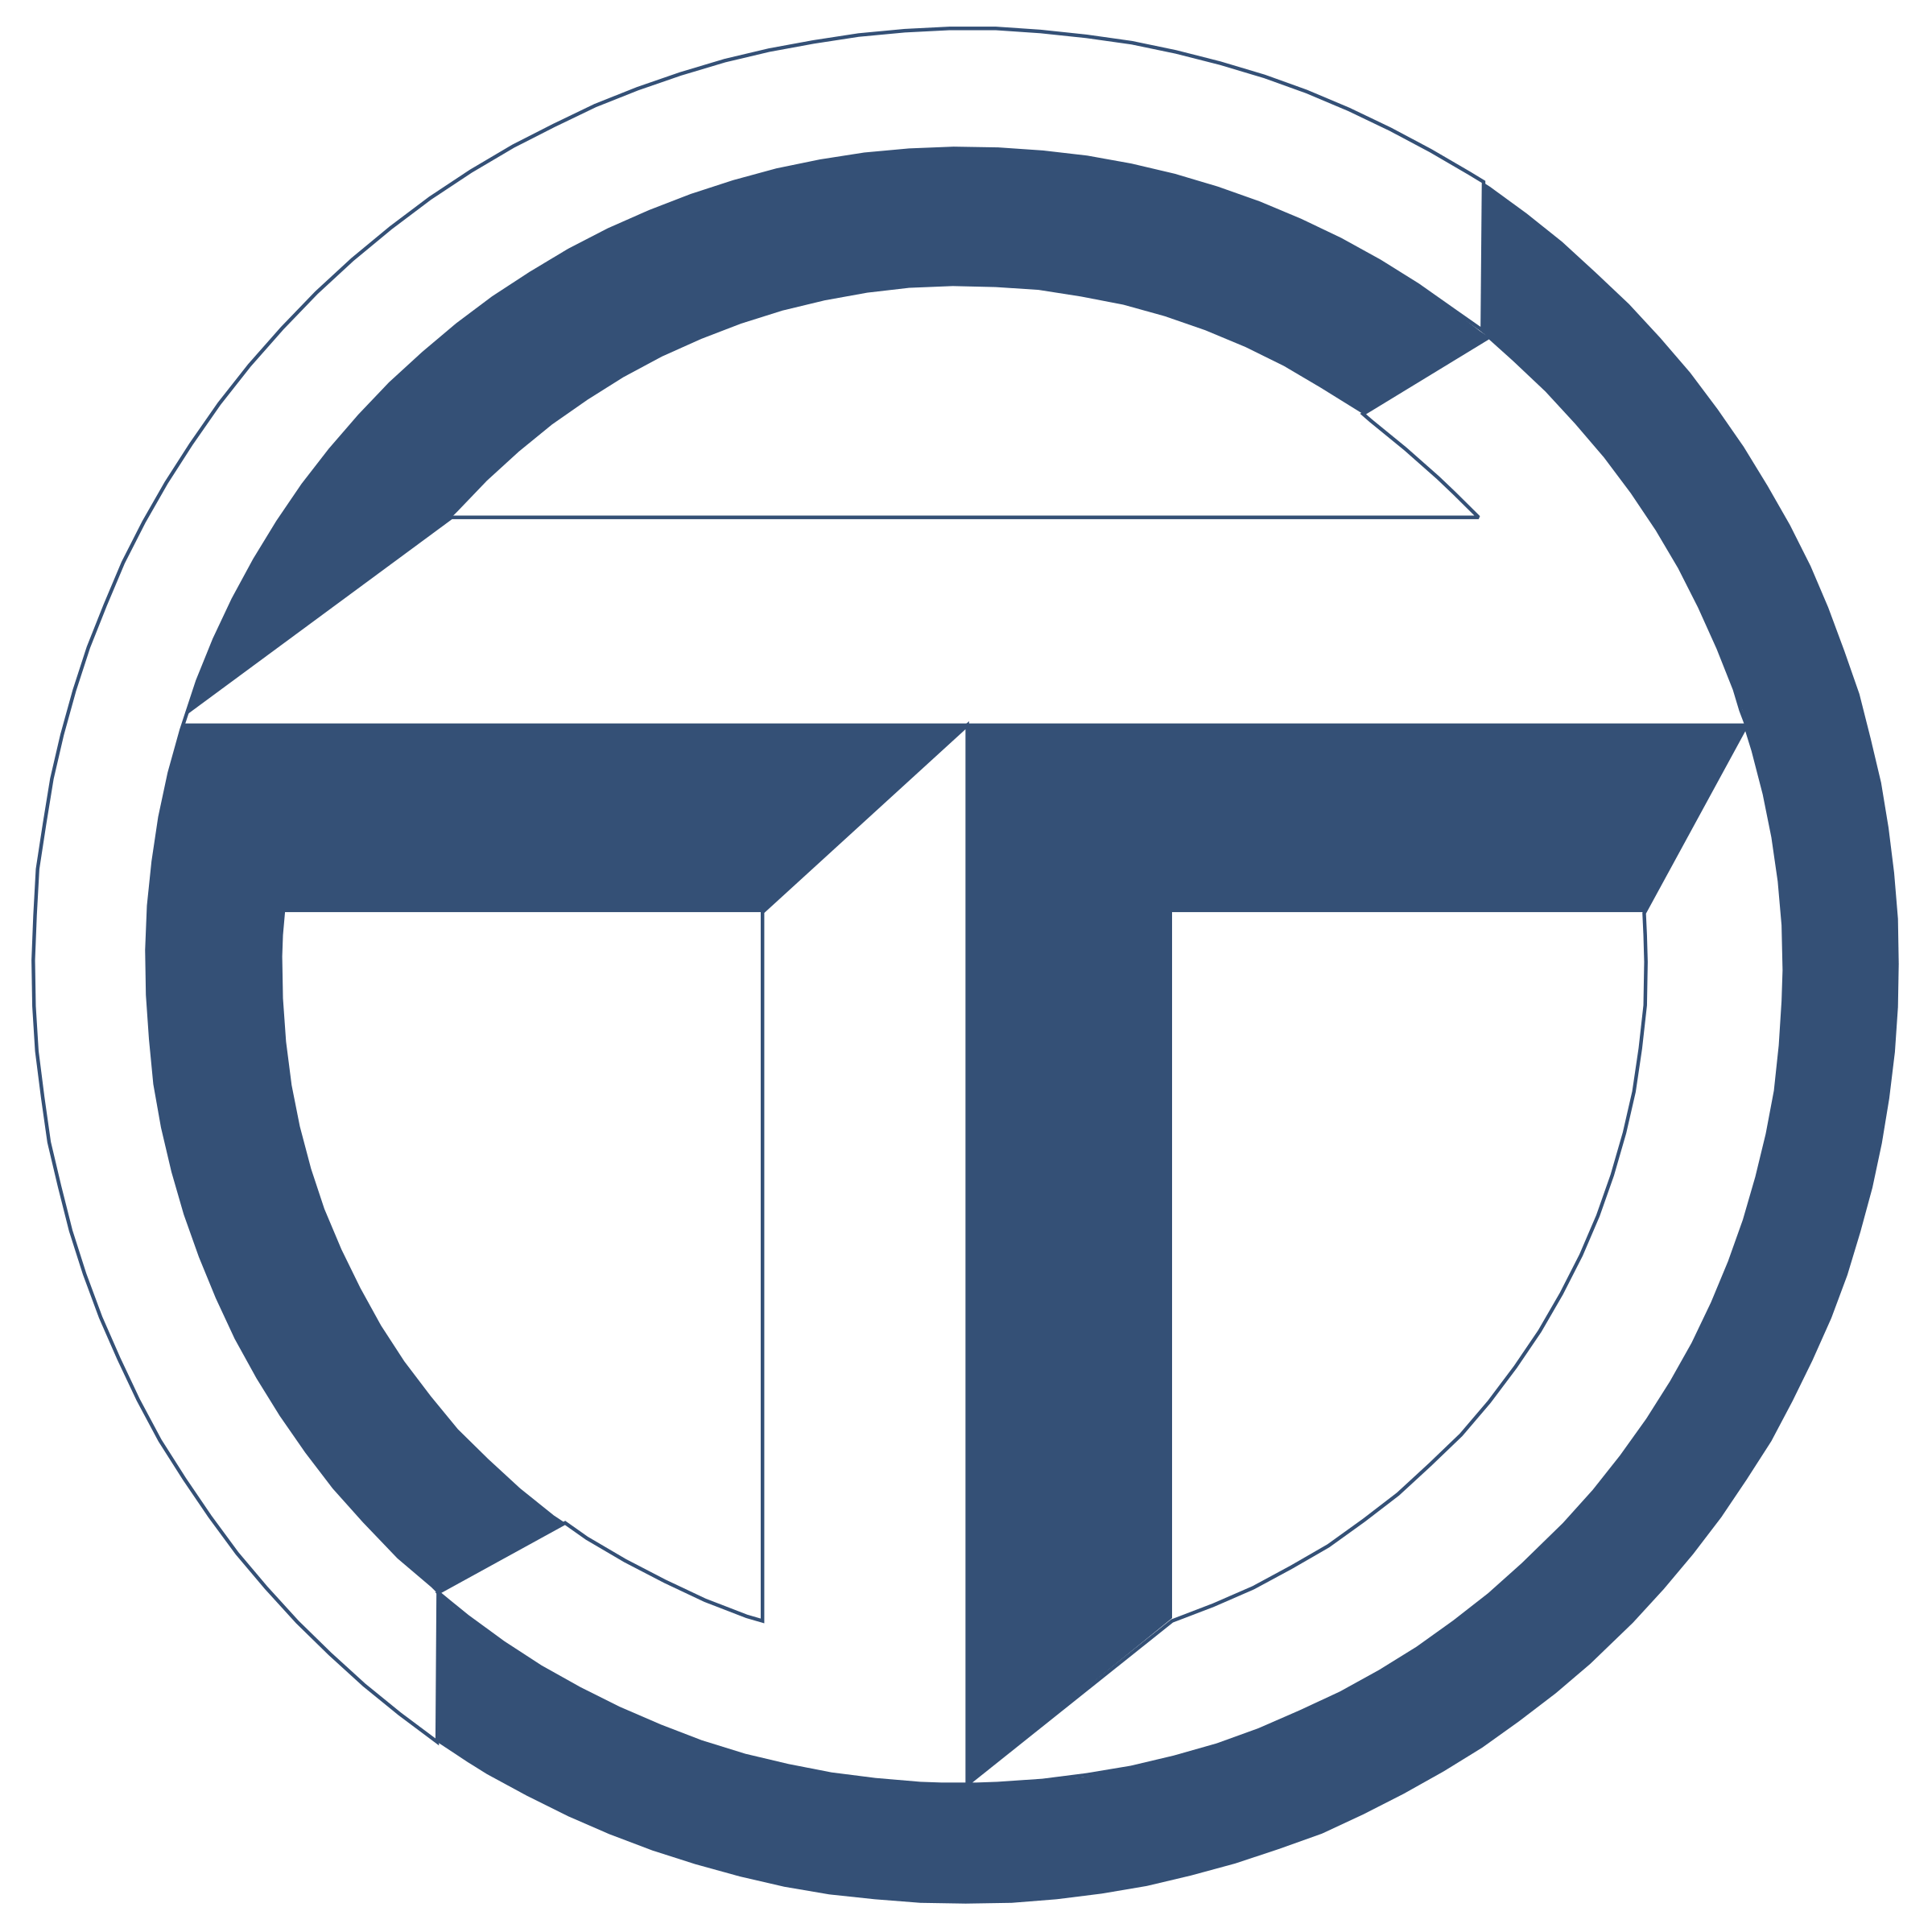 Talbot Logo - Talbot Logo PNG Transparent & SVG Vector - Freebie Supply